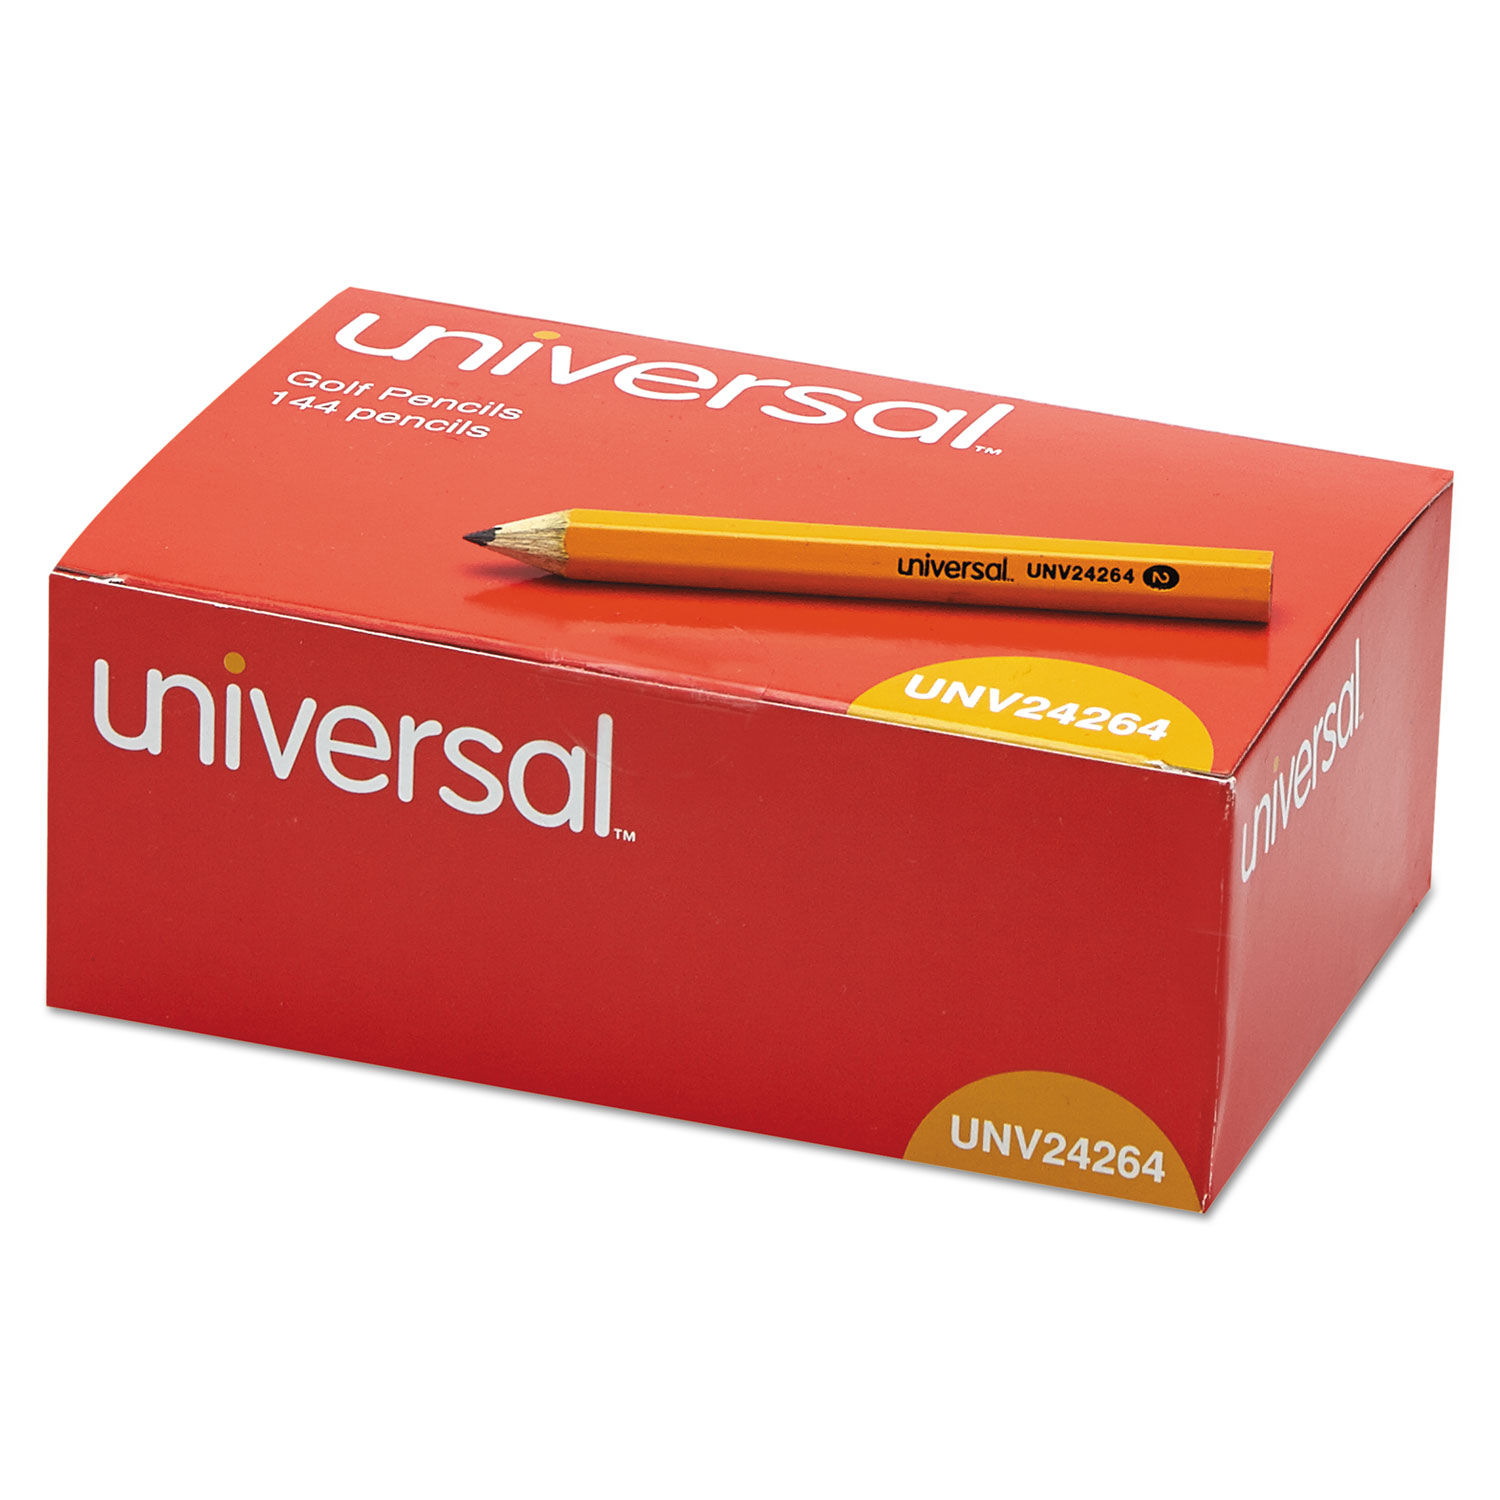 Pica FOR ALL Universal Pencil Black & White - 546/24